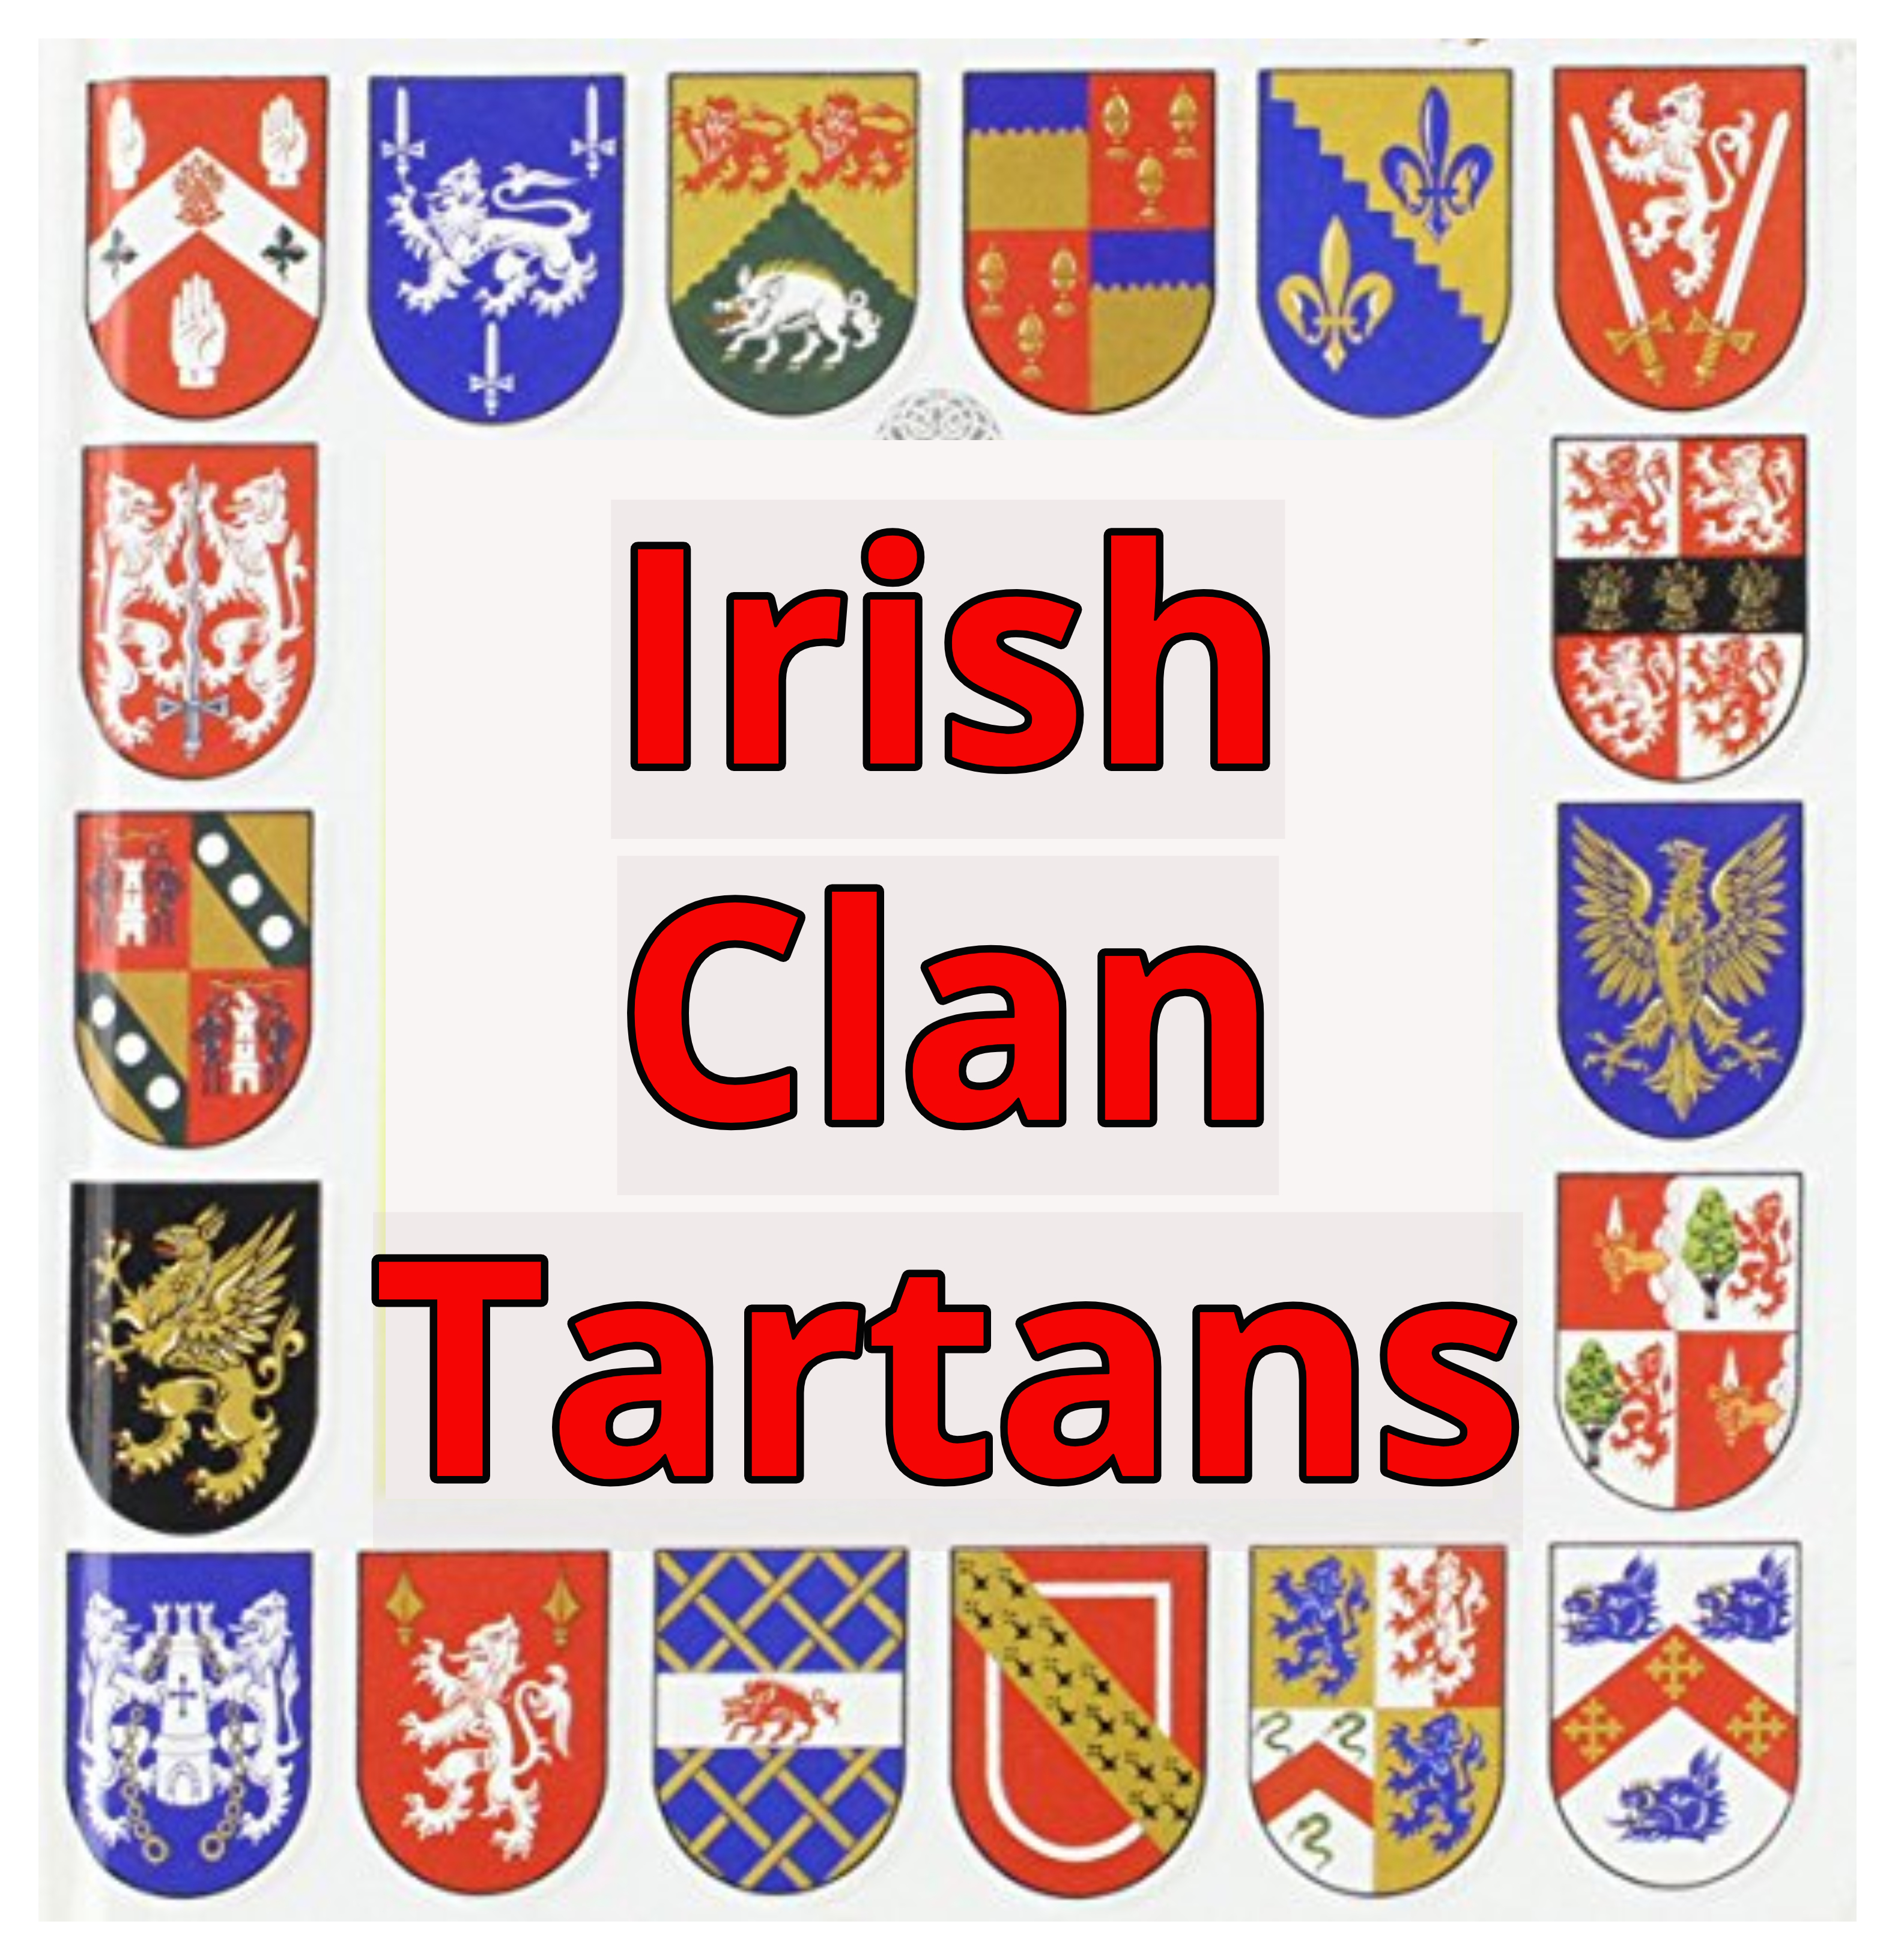 Irish_Clan_Tartans.jpg